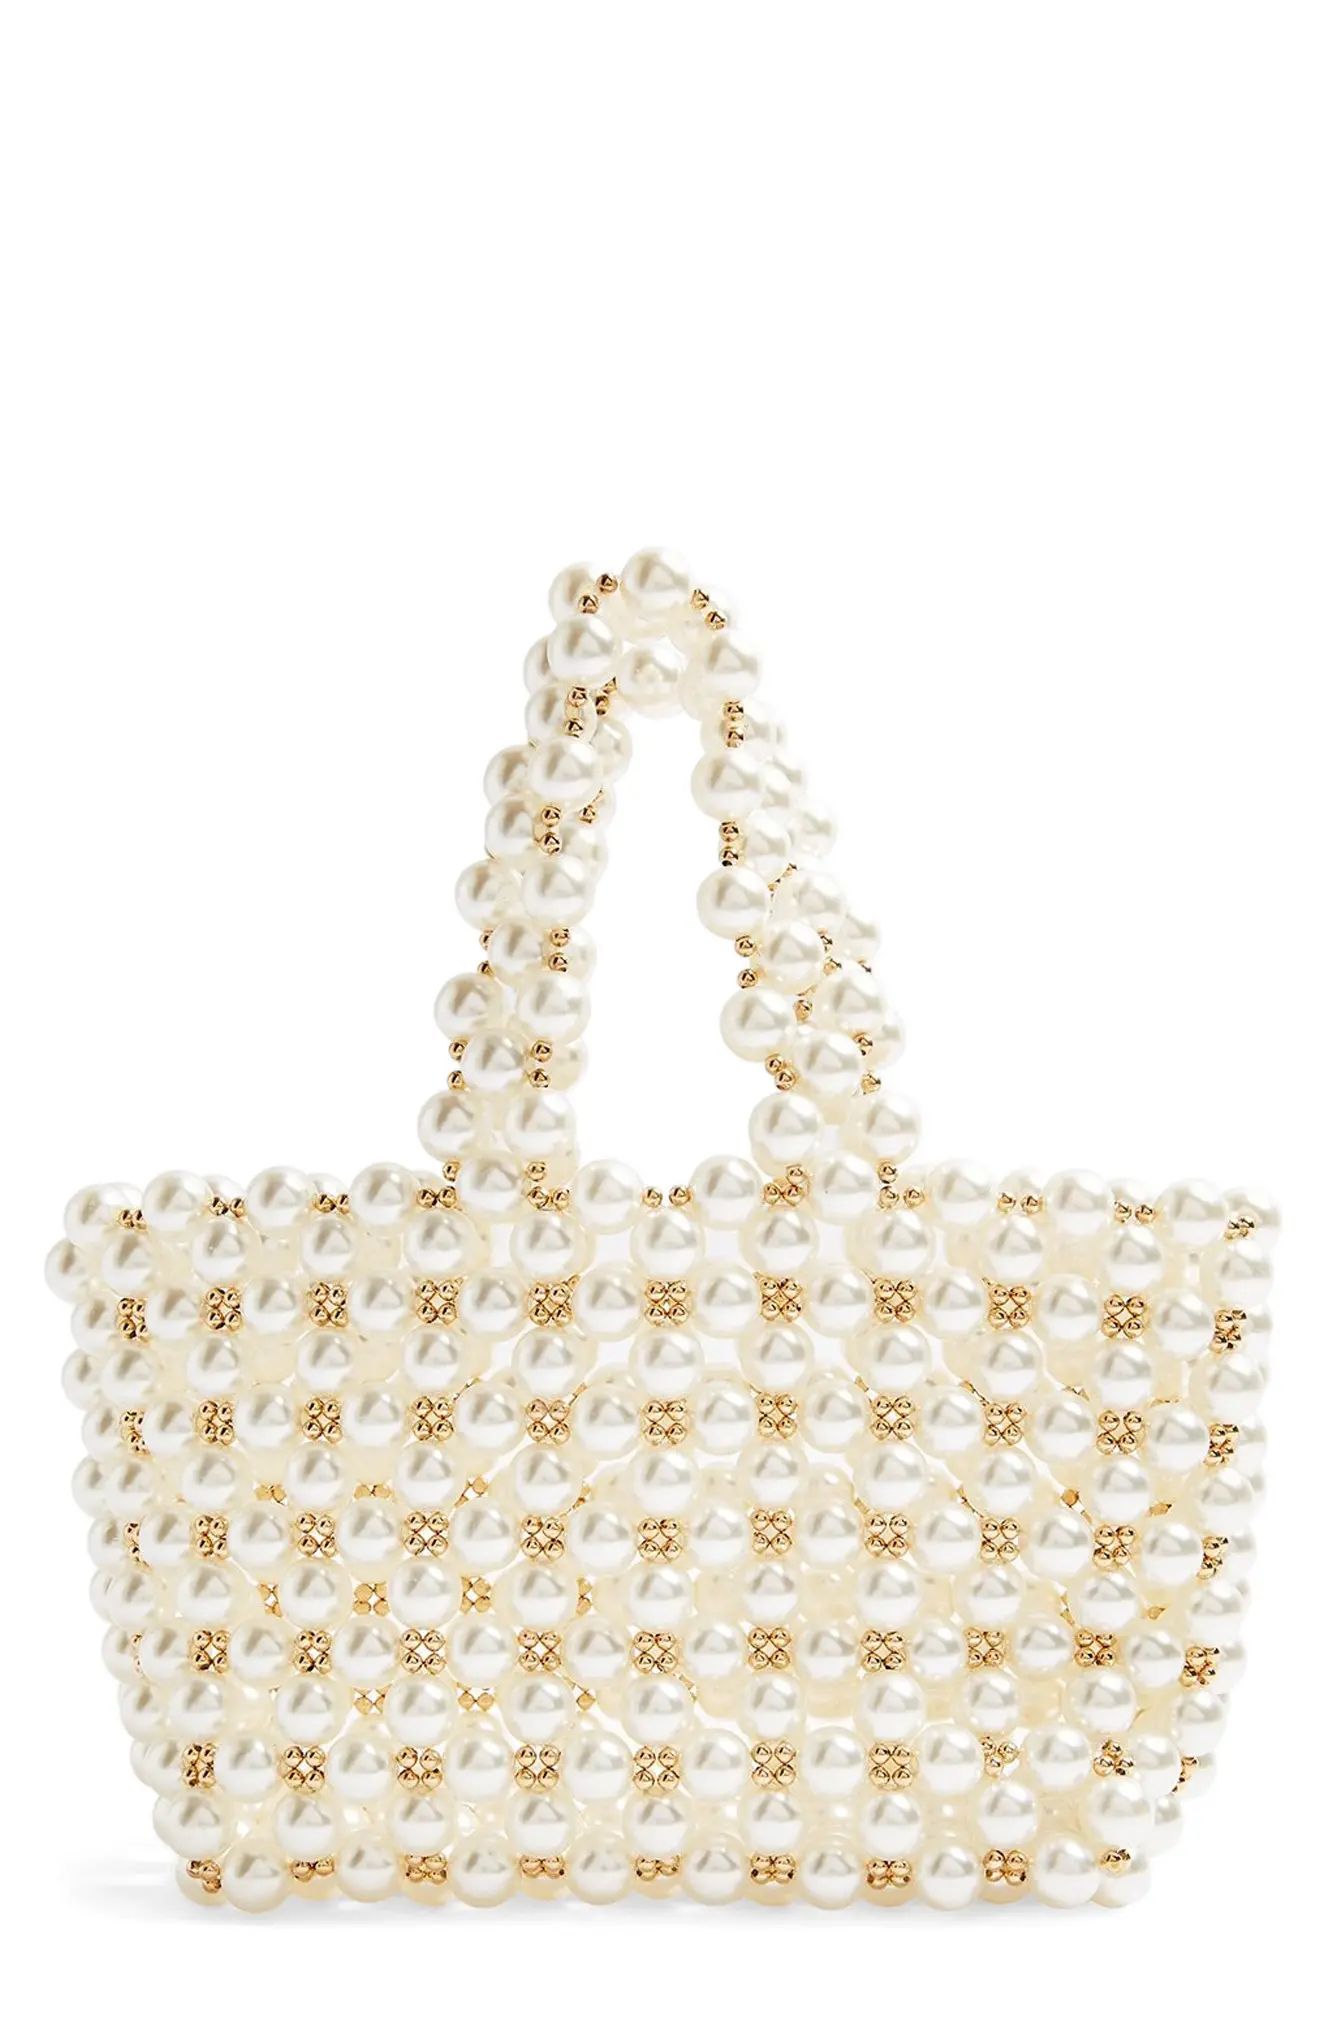 Topshop Pam Imitation Pearl Grab Bag - Ivory | Nordstrom